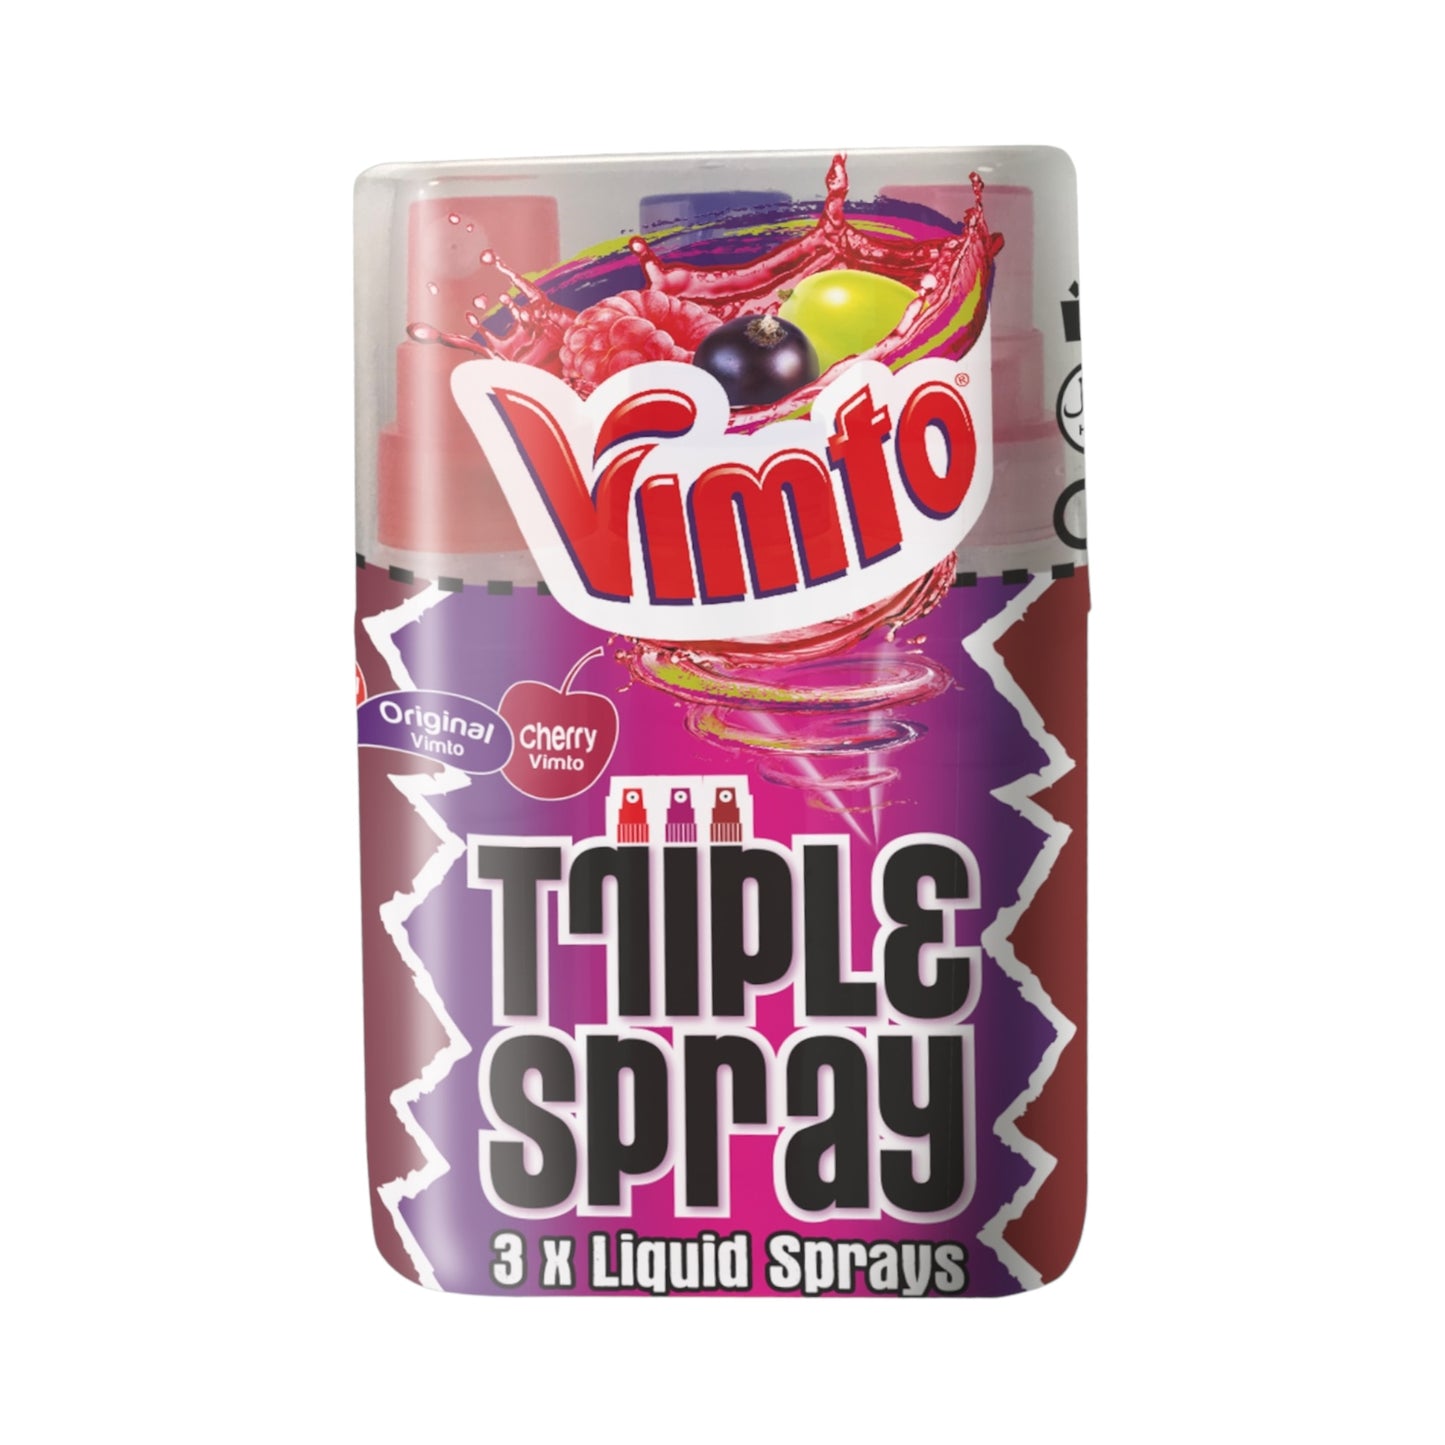 Vimto Triple Candy Spray - 15ml